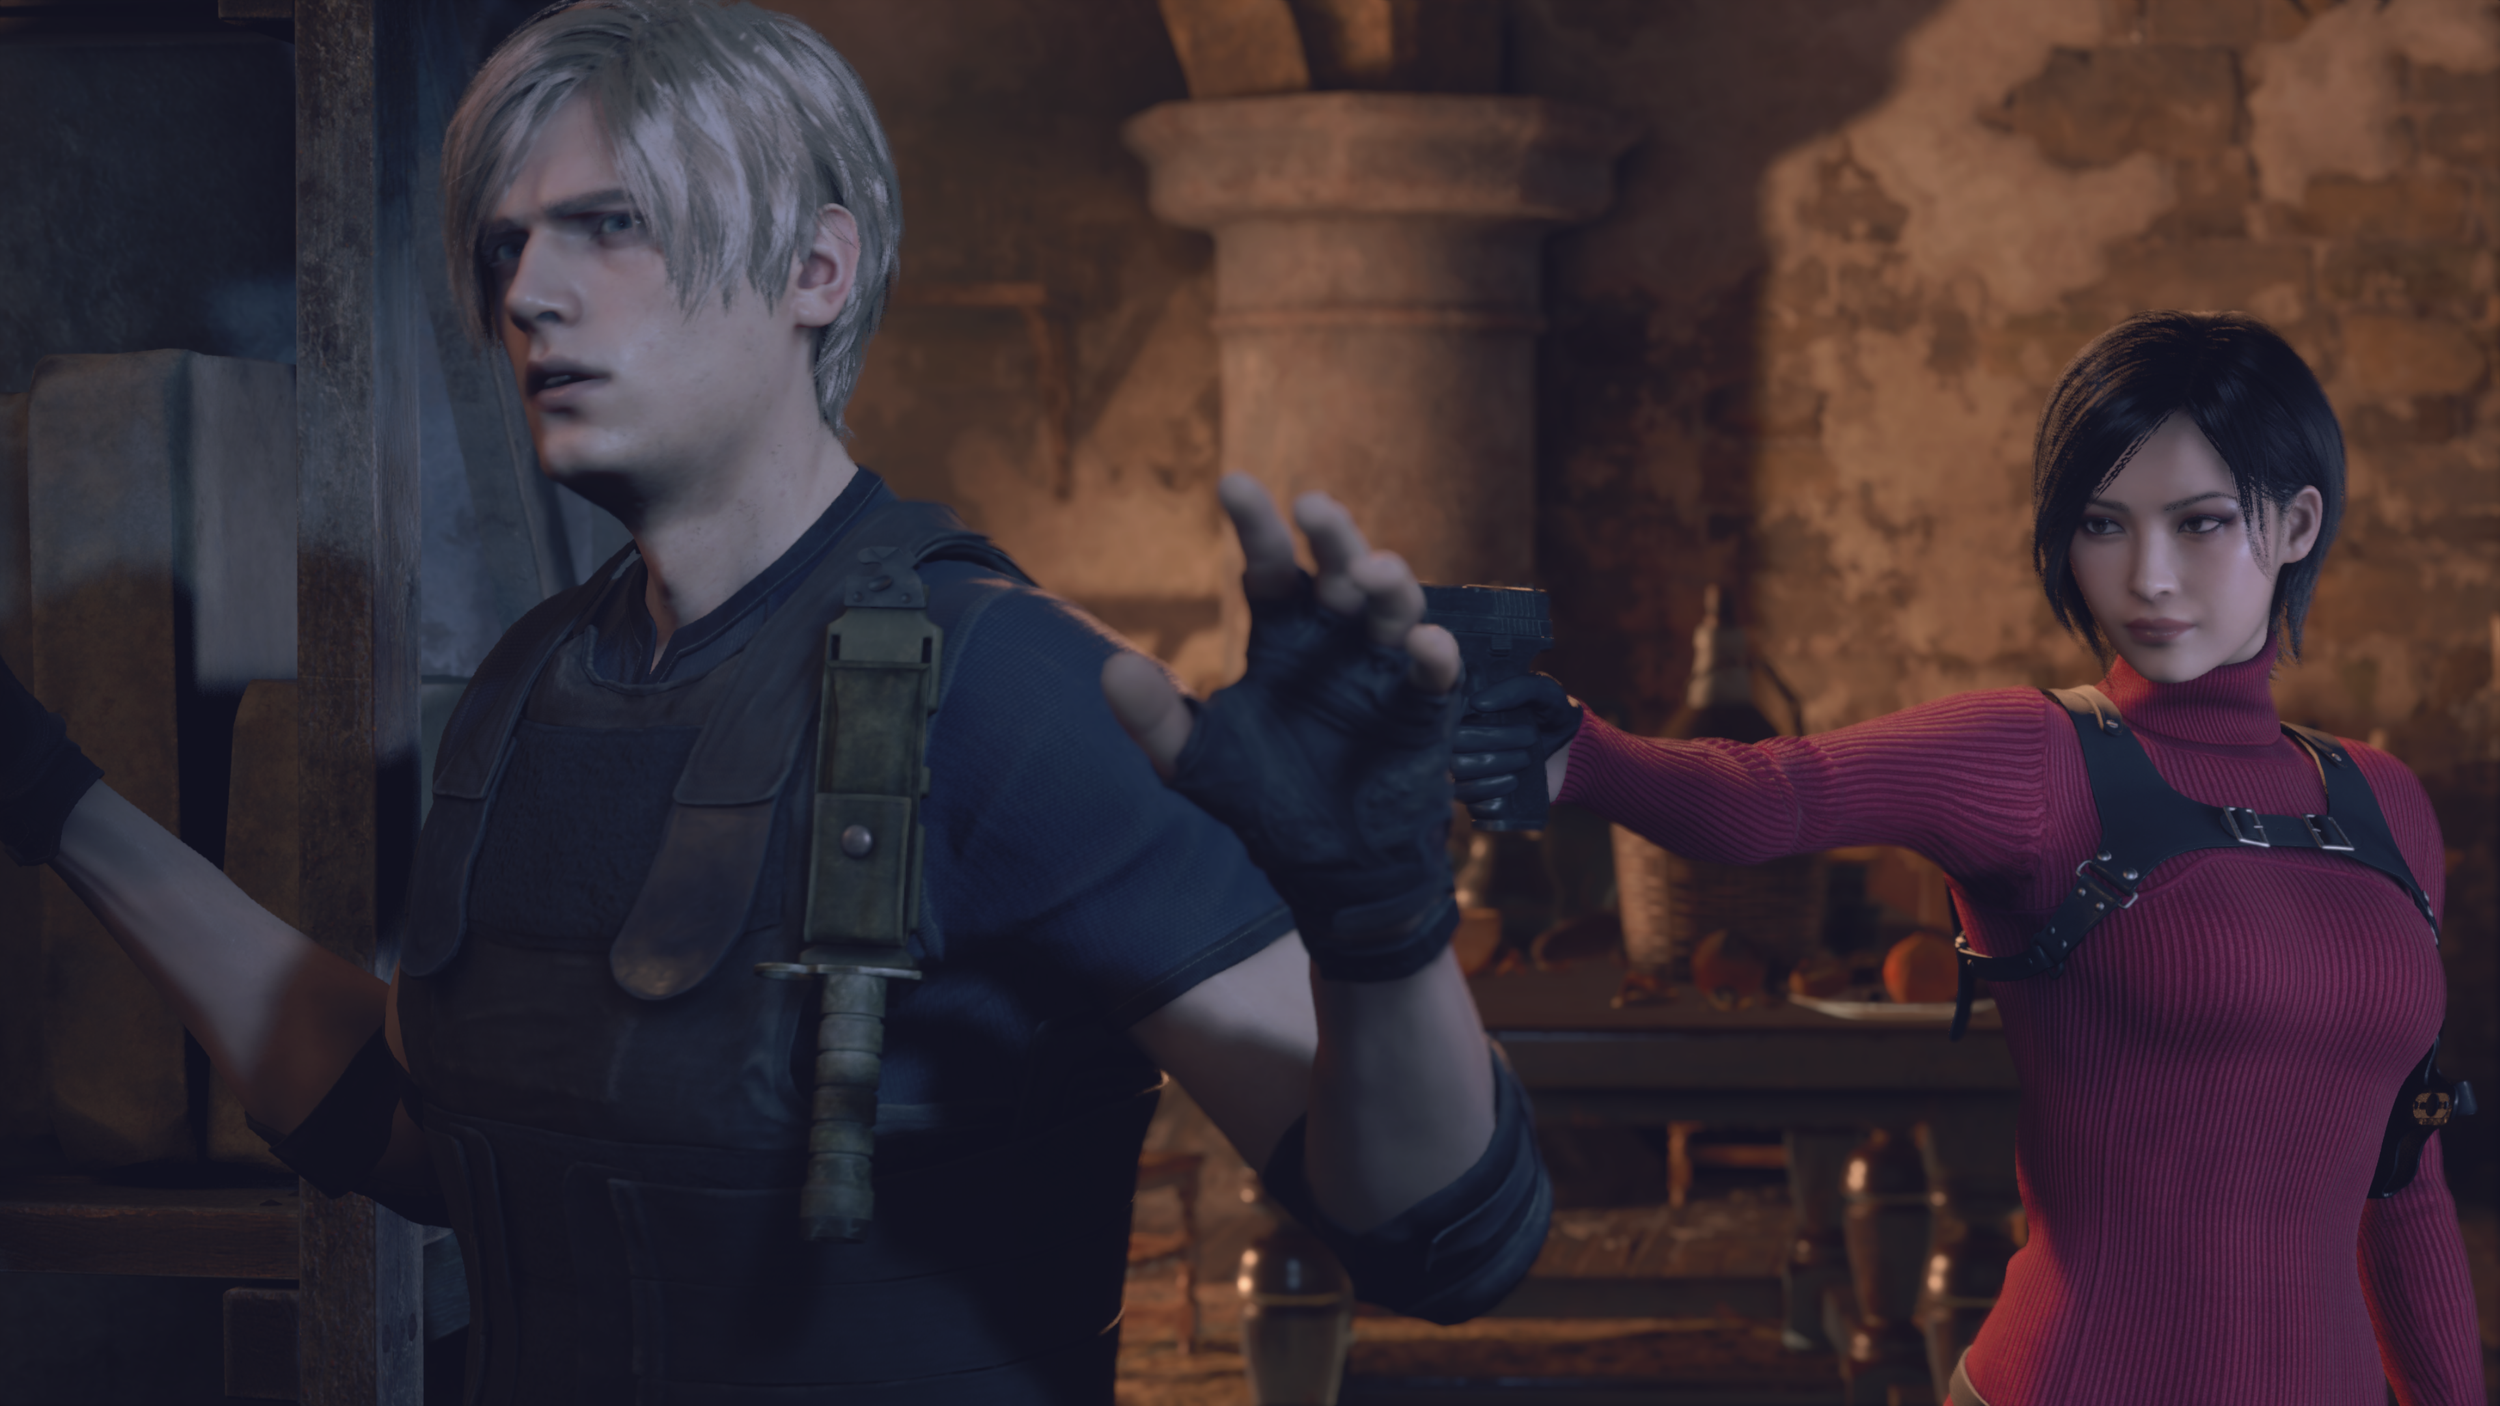 Resident Evil 4 Remake, Xbox Series S/X - PS5 - PC, Graphics Comparison